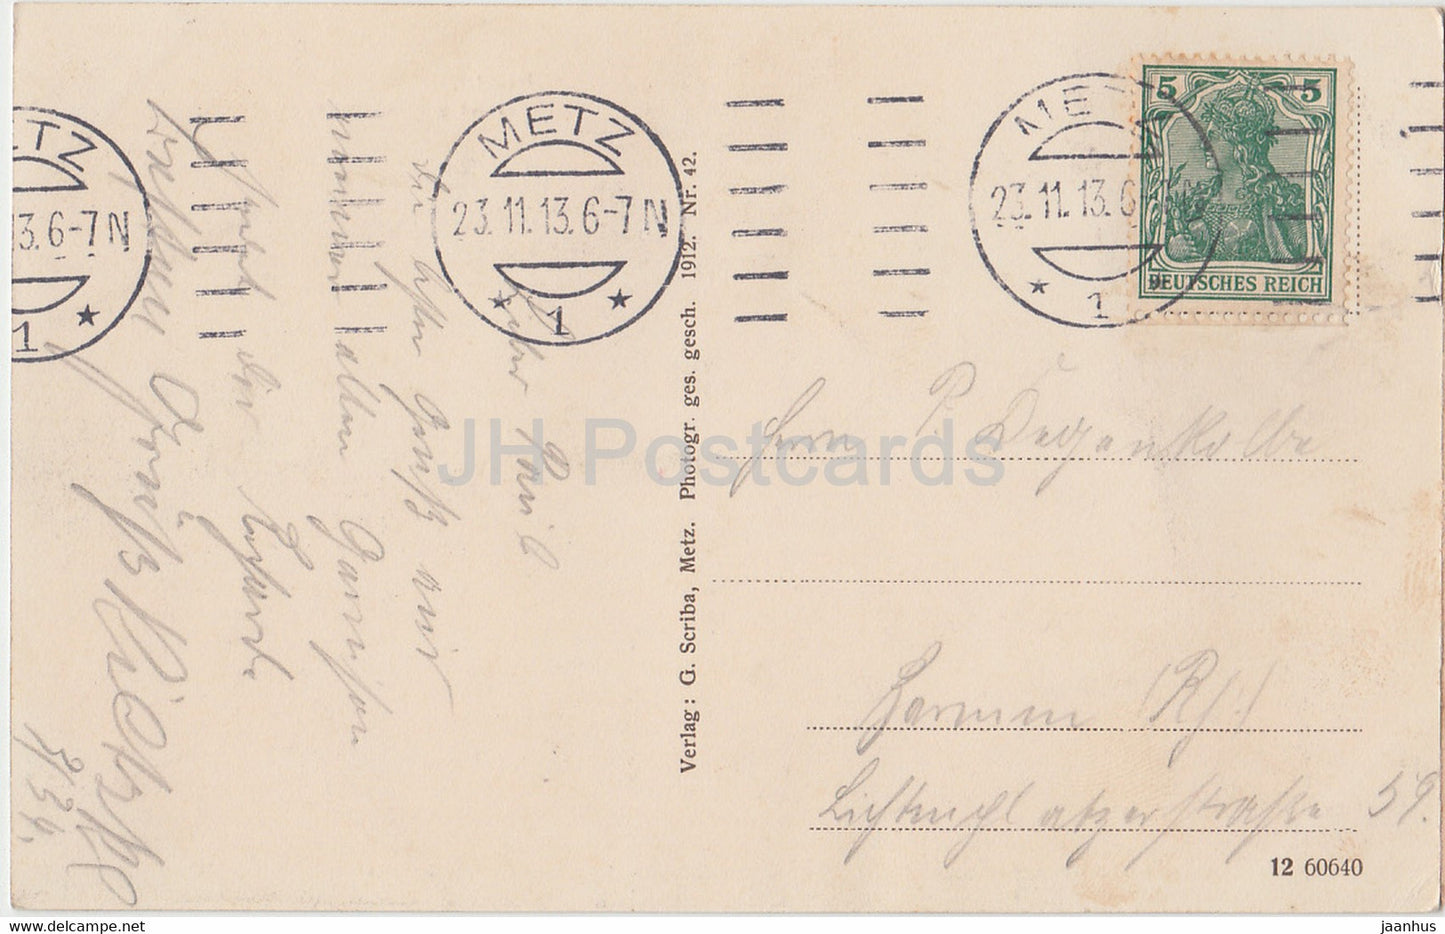 Metz - Neuer Hauptbahnhof - Nouvelle gare centrale - railway station - old postcard - 1913 - France - used